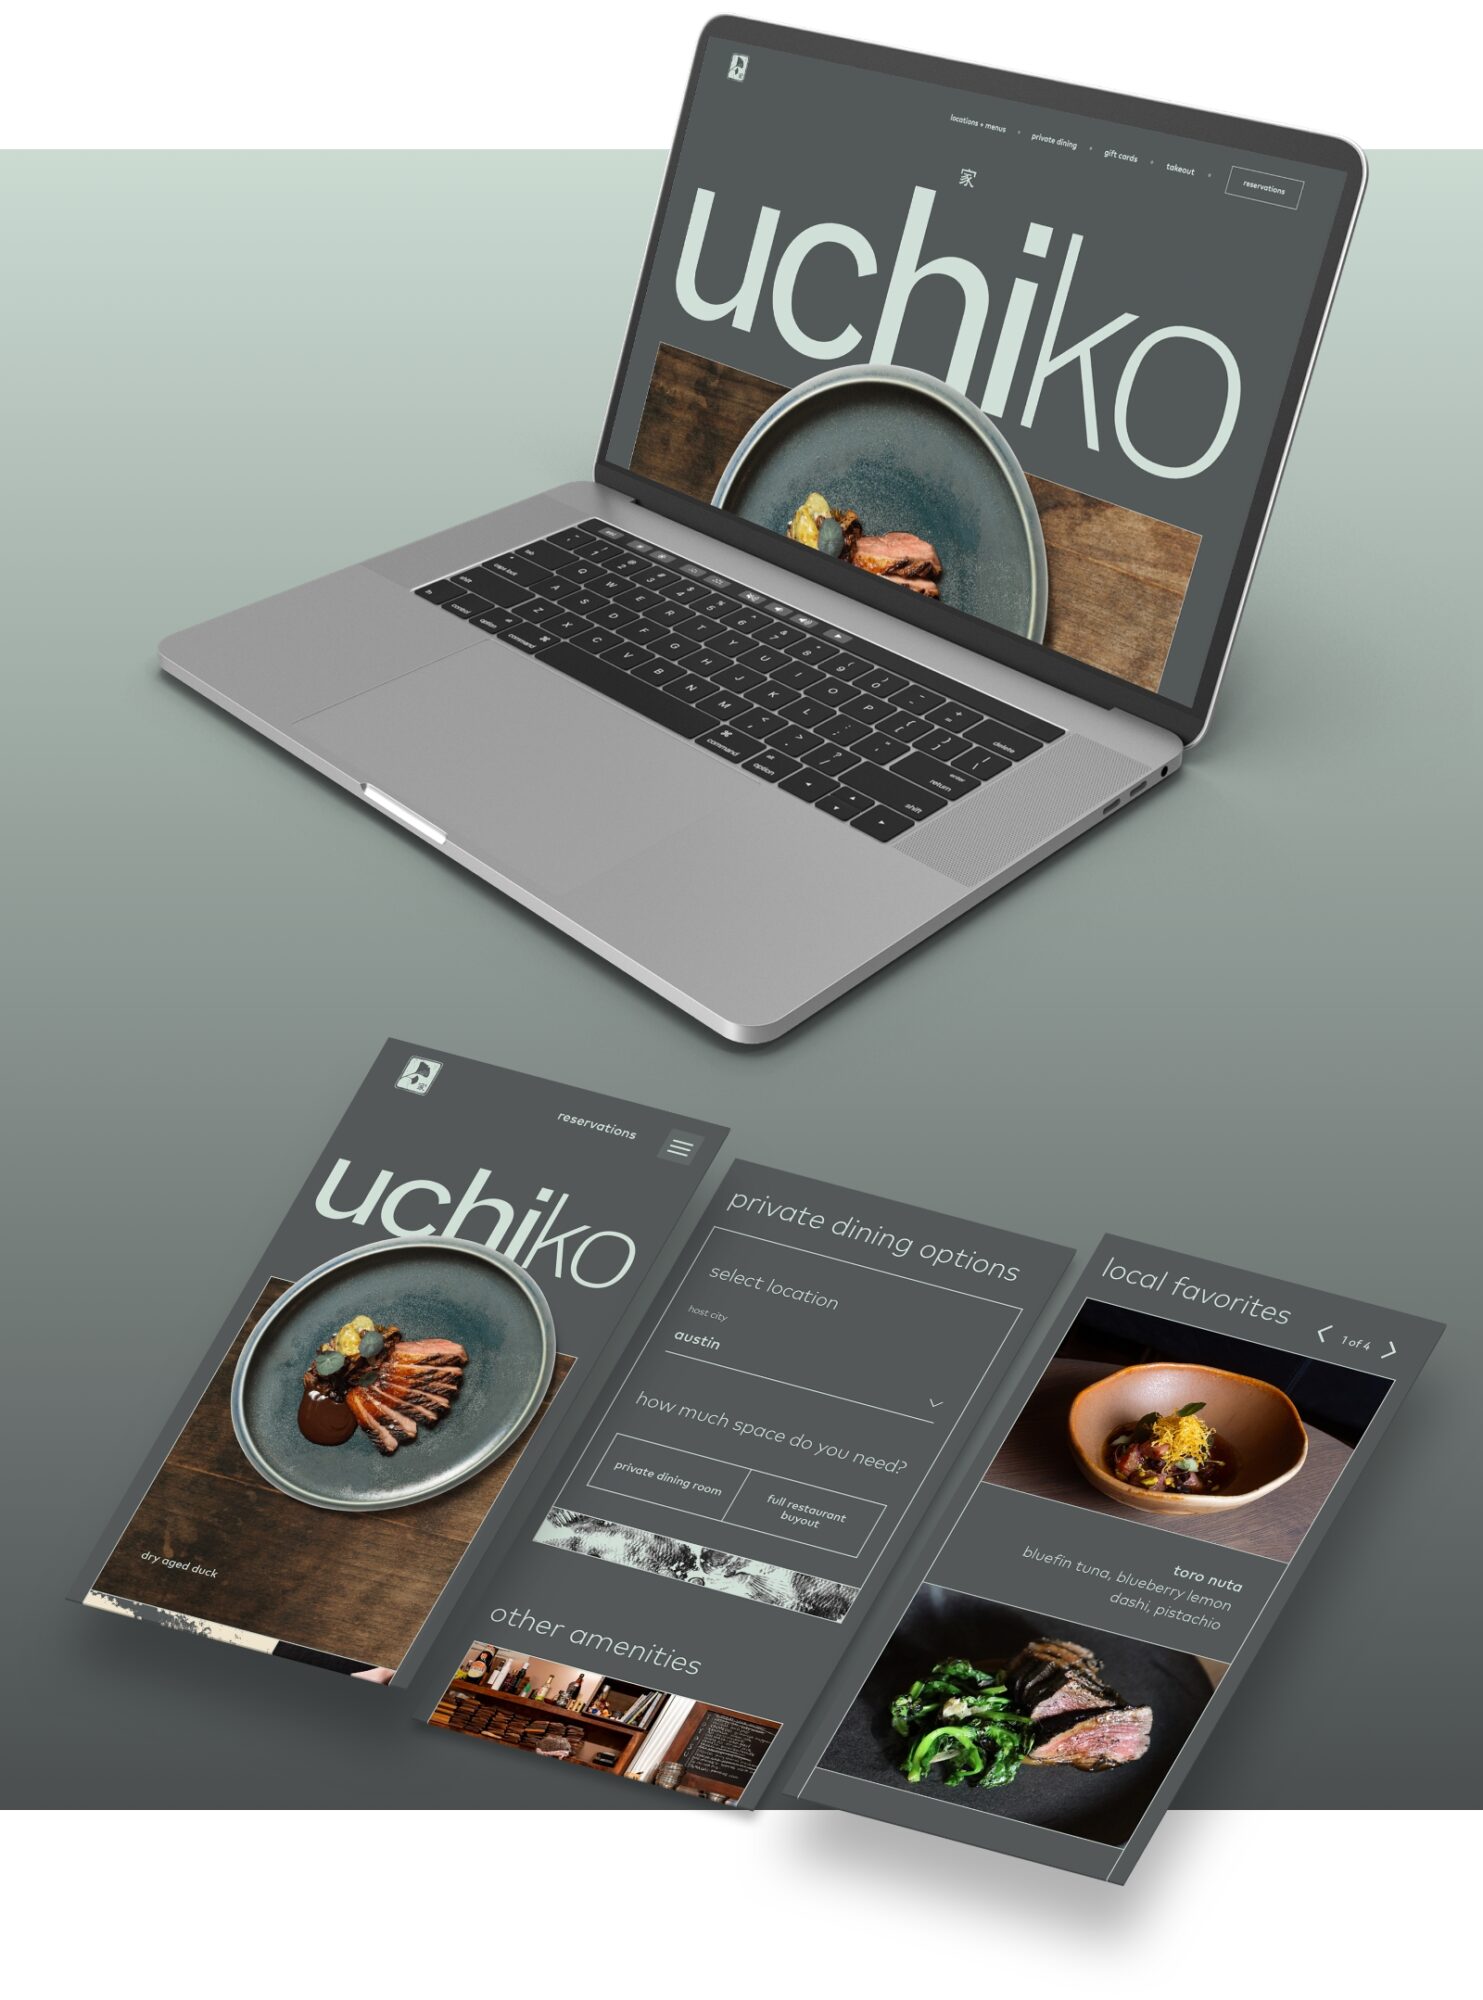 Laptop screenshot of the Uchiko website homepage and smartphone screenshots of three interior pages.